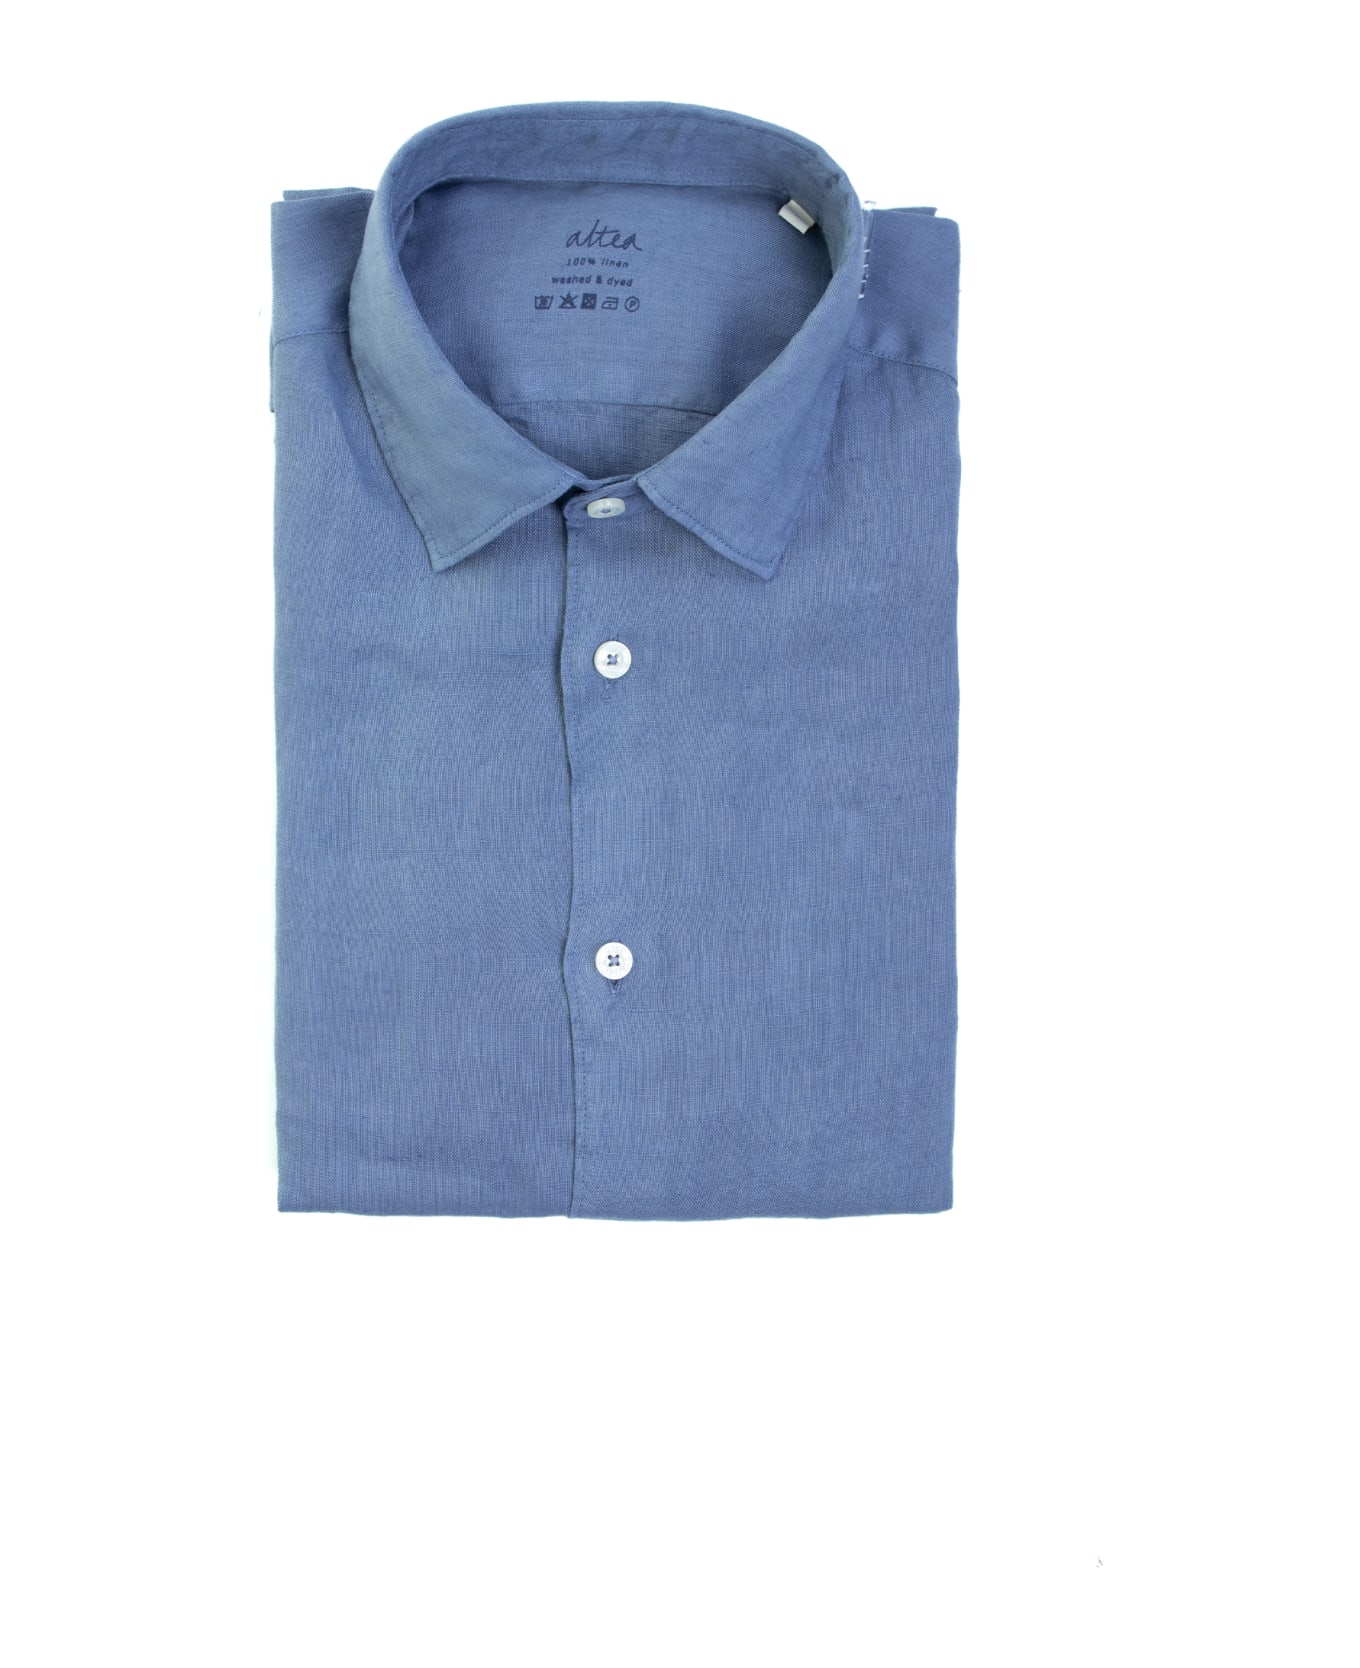 Altea Slim Fit Linen Shirt - AVIO